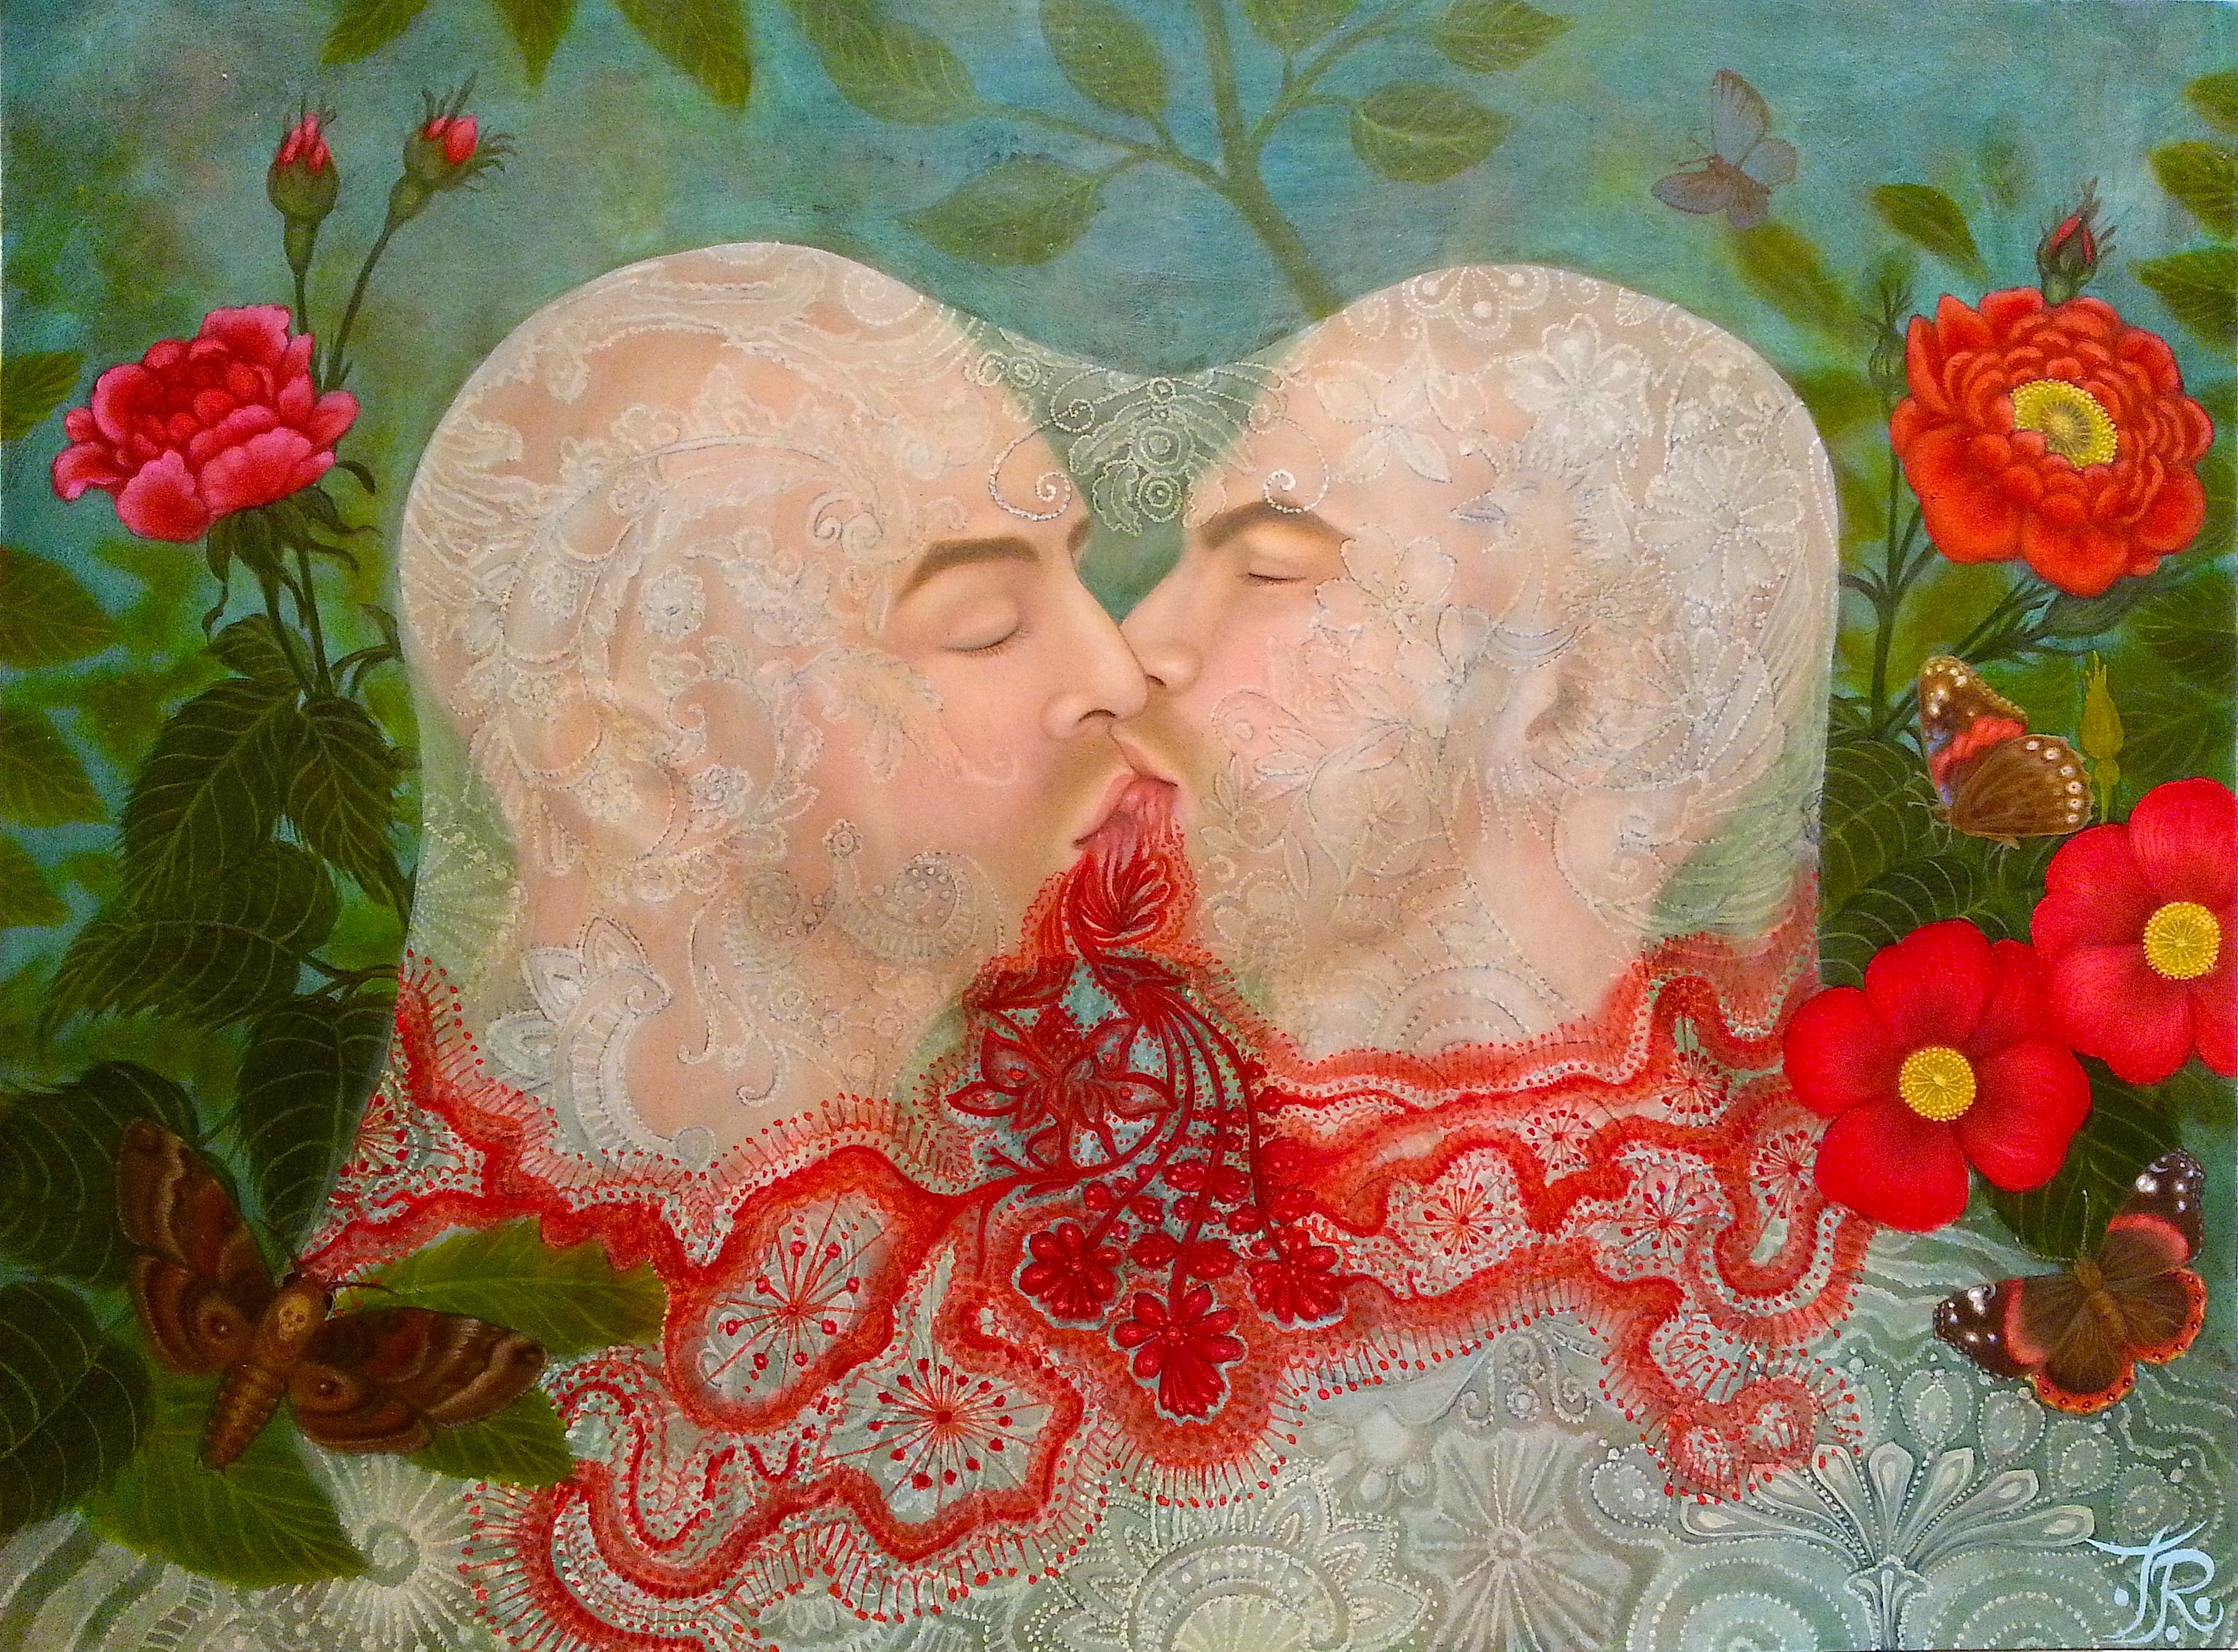 The Strange Perfume of Love, 2014. Courtesy of the artist.